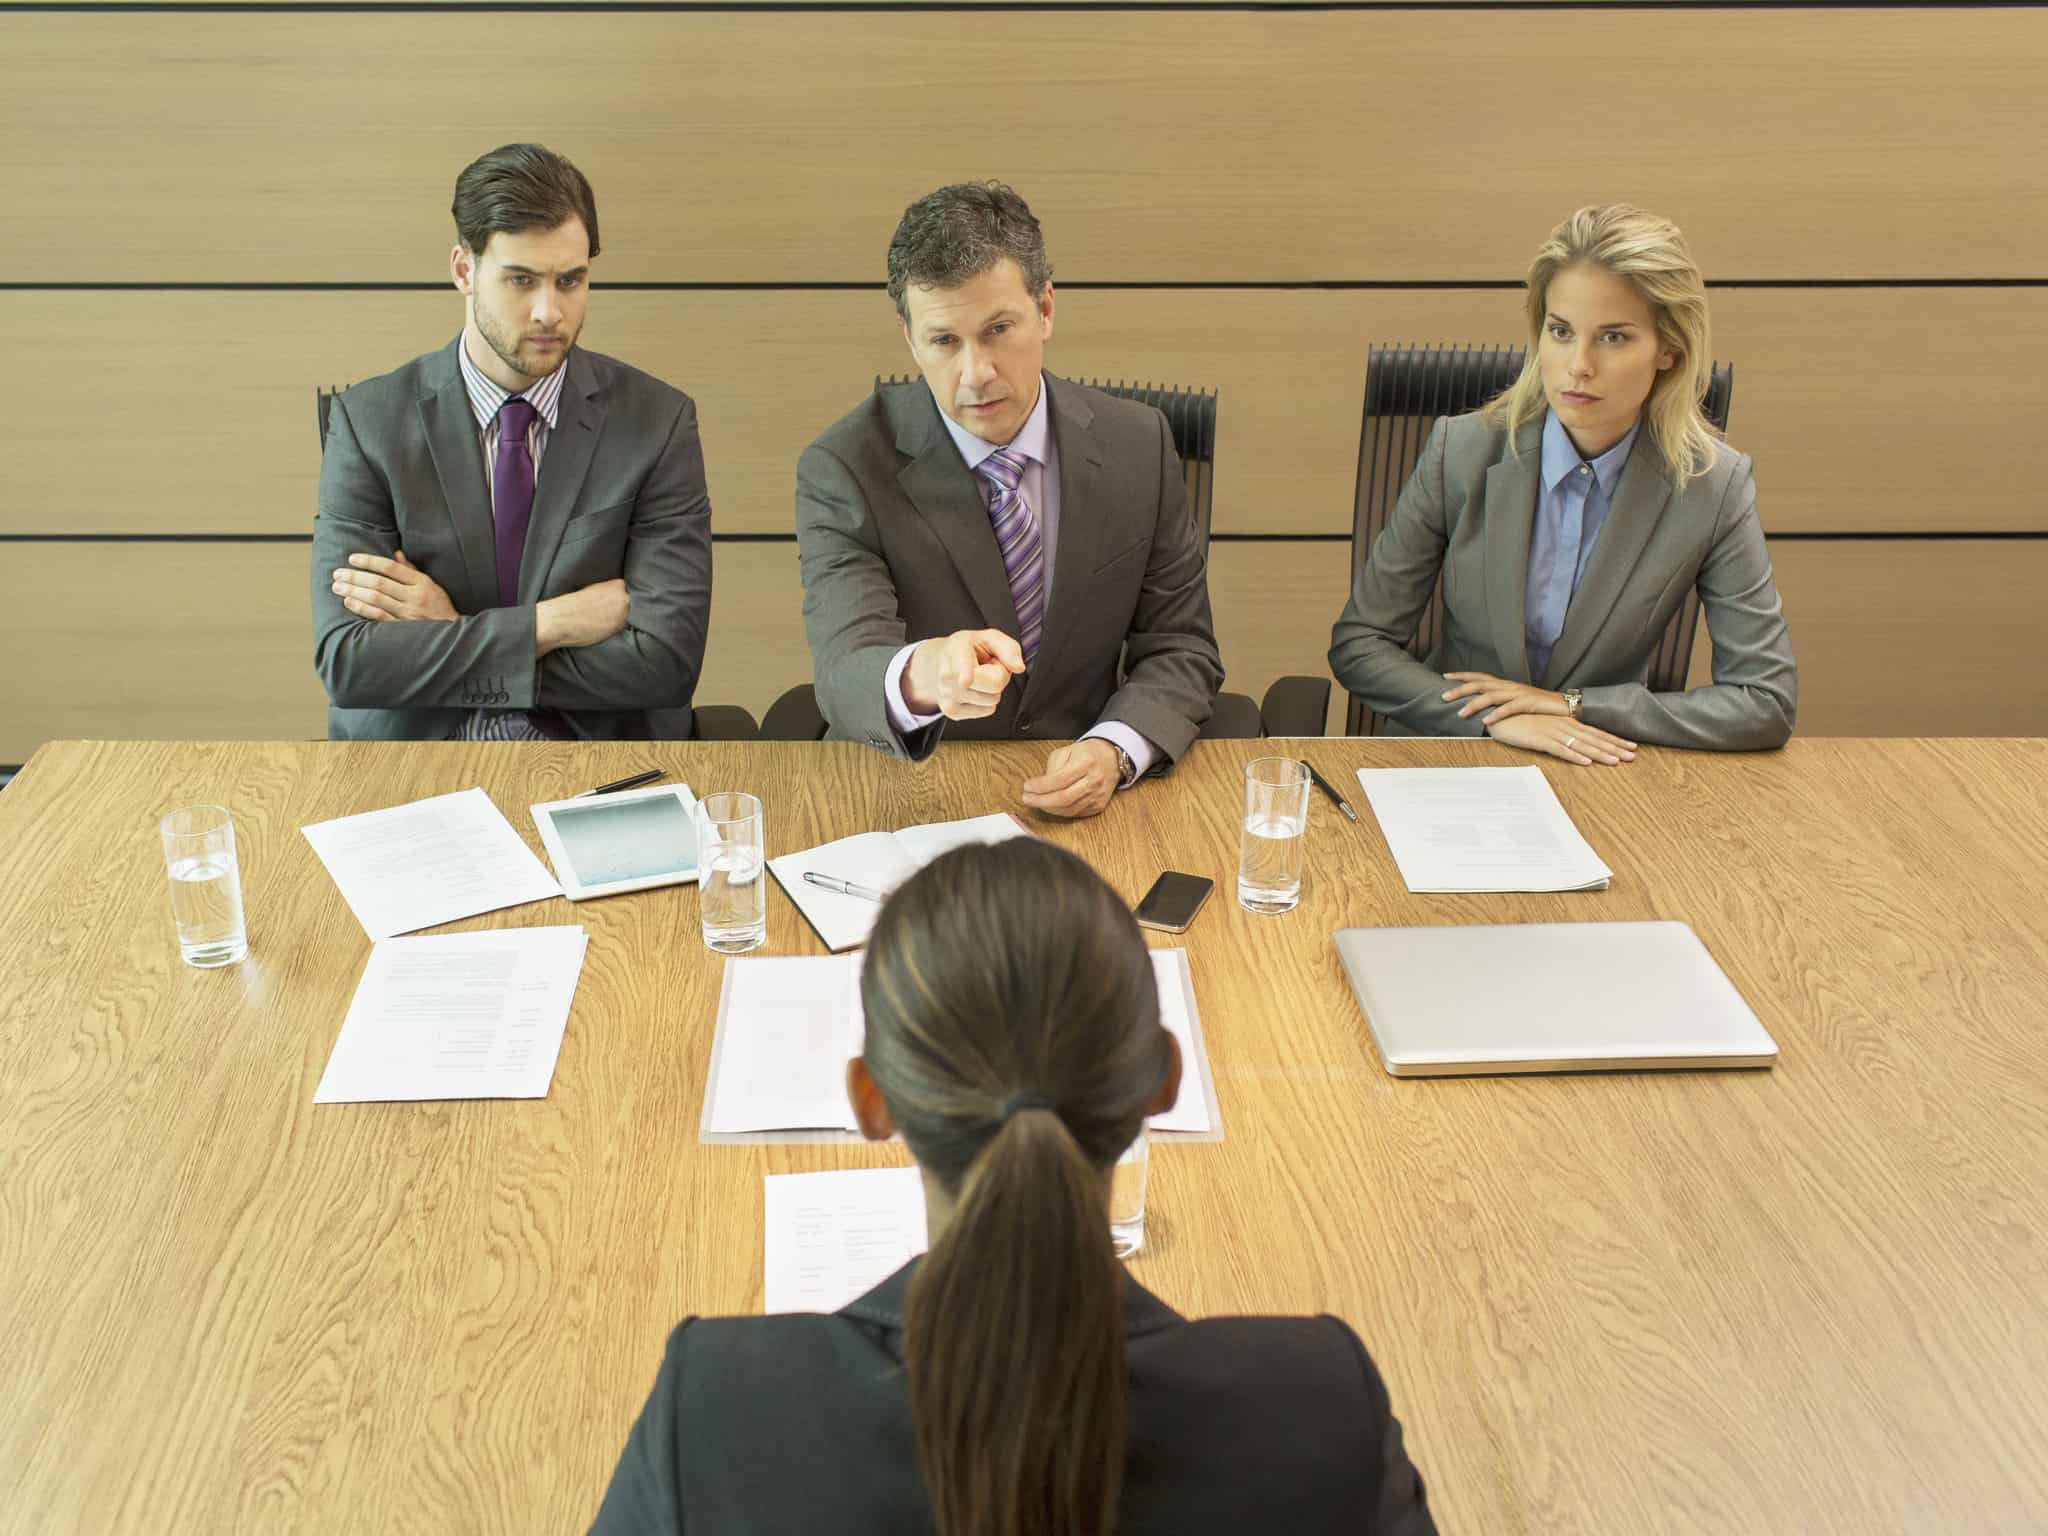 How to Handle Panel Job Interviews